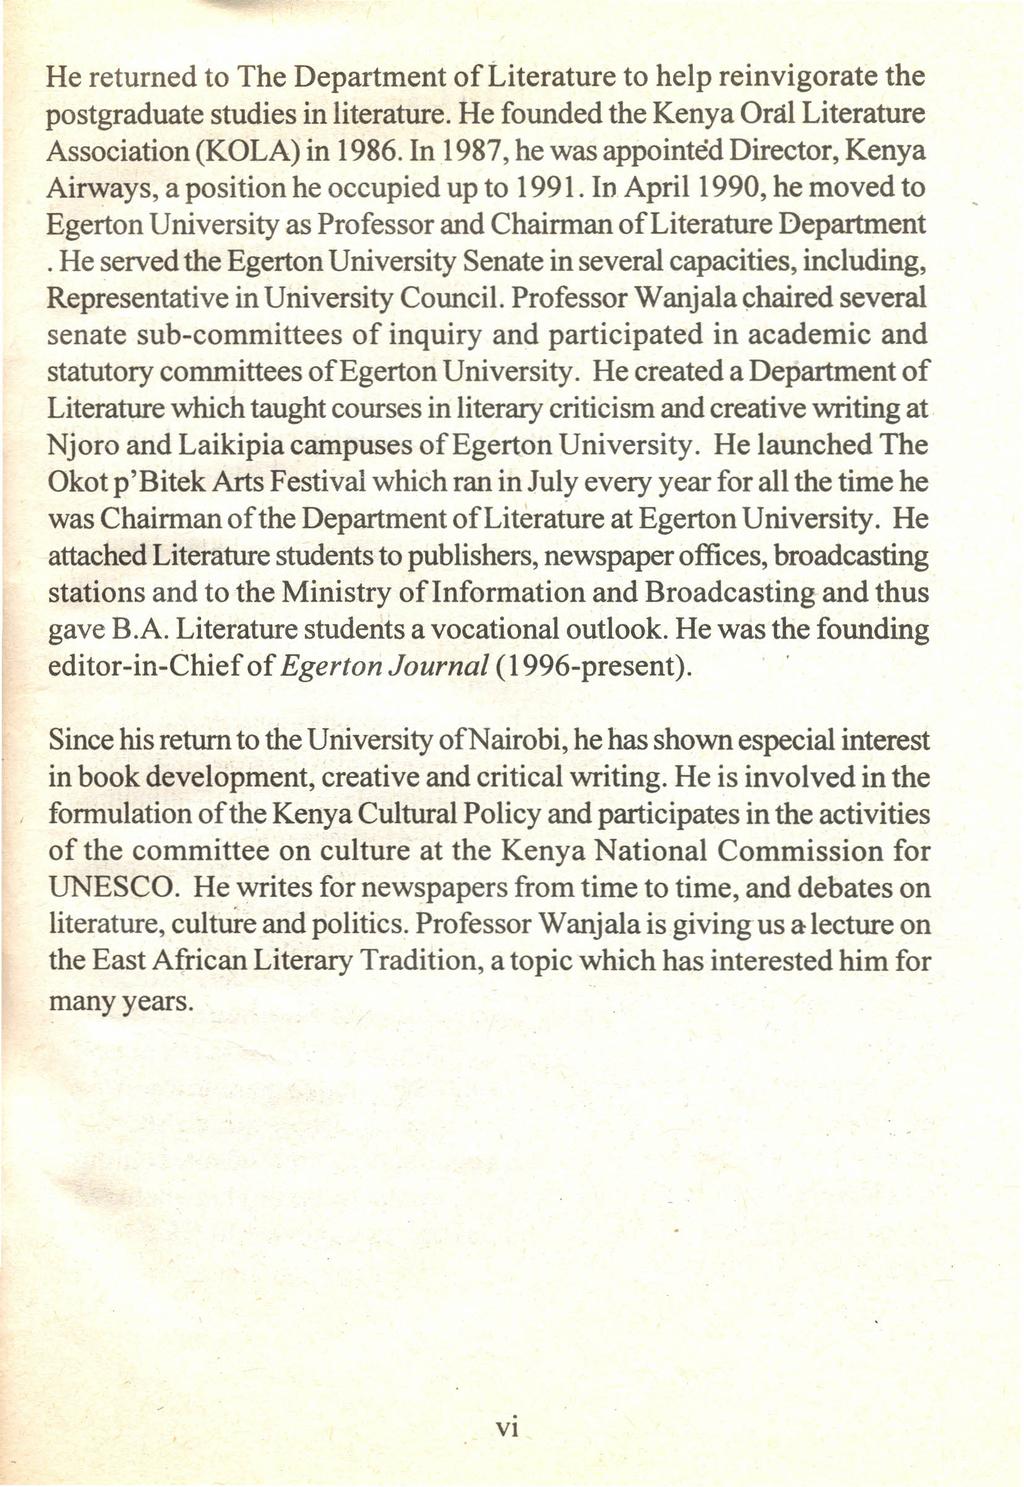 He returned to The Department of Literature to help reinvigorate the postgraduate studies in literature. He founded the Kenya Oral Literature Association (KOLA) in 1986.